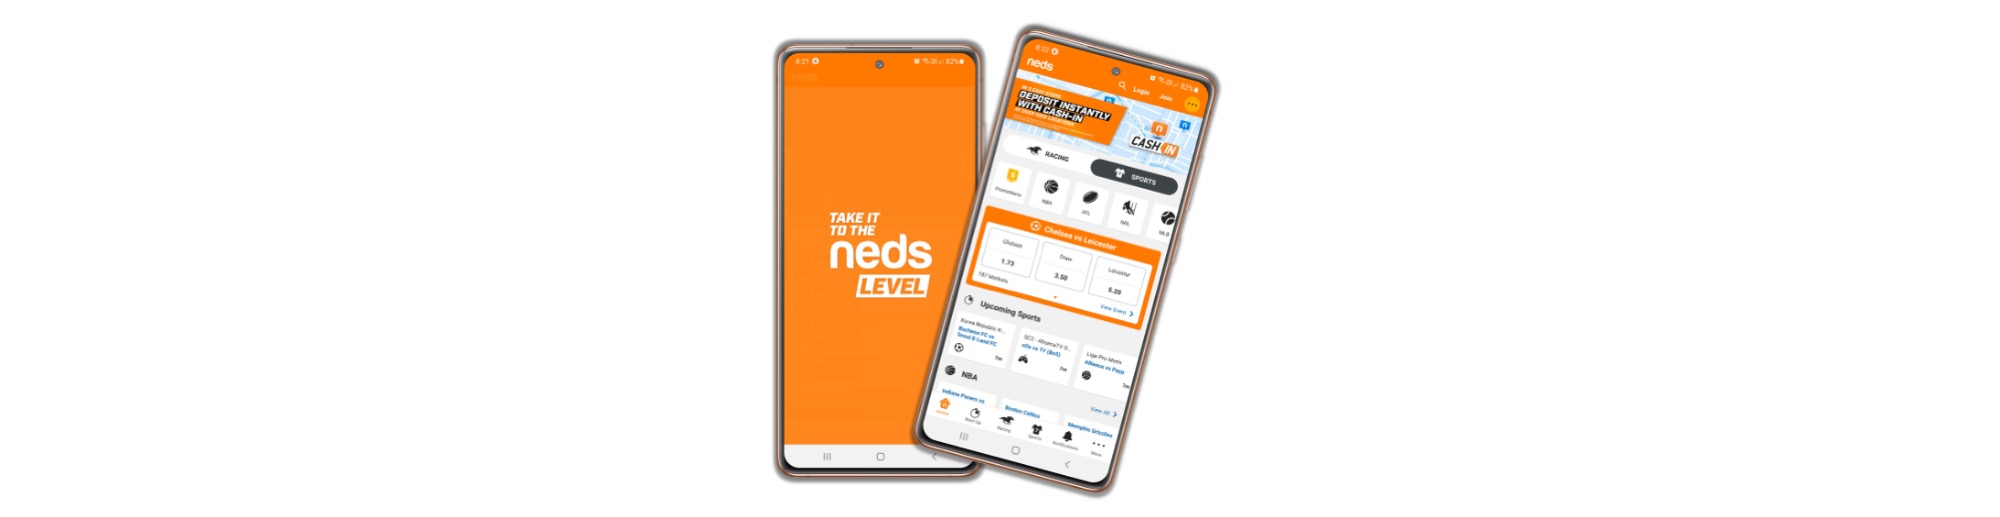 Neds Phone App